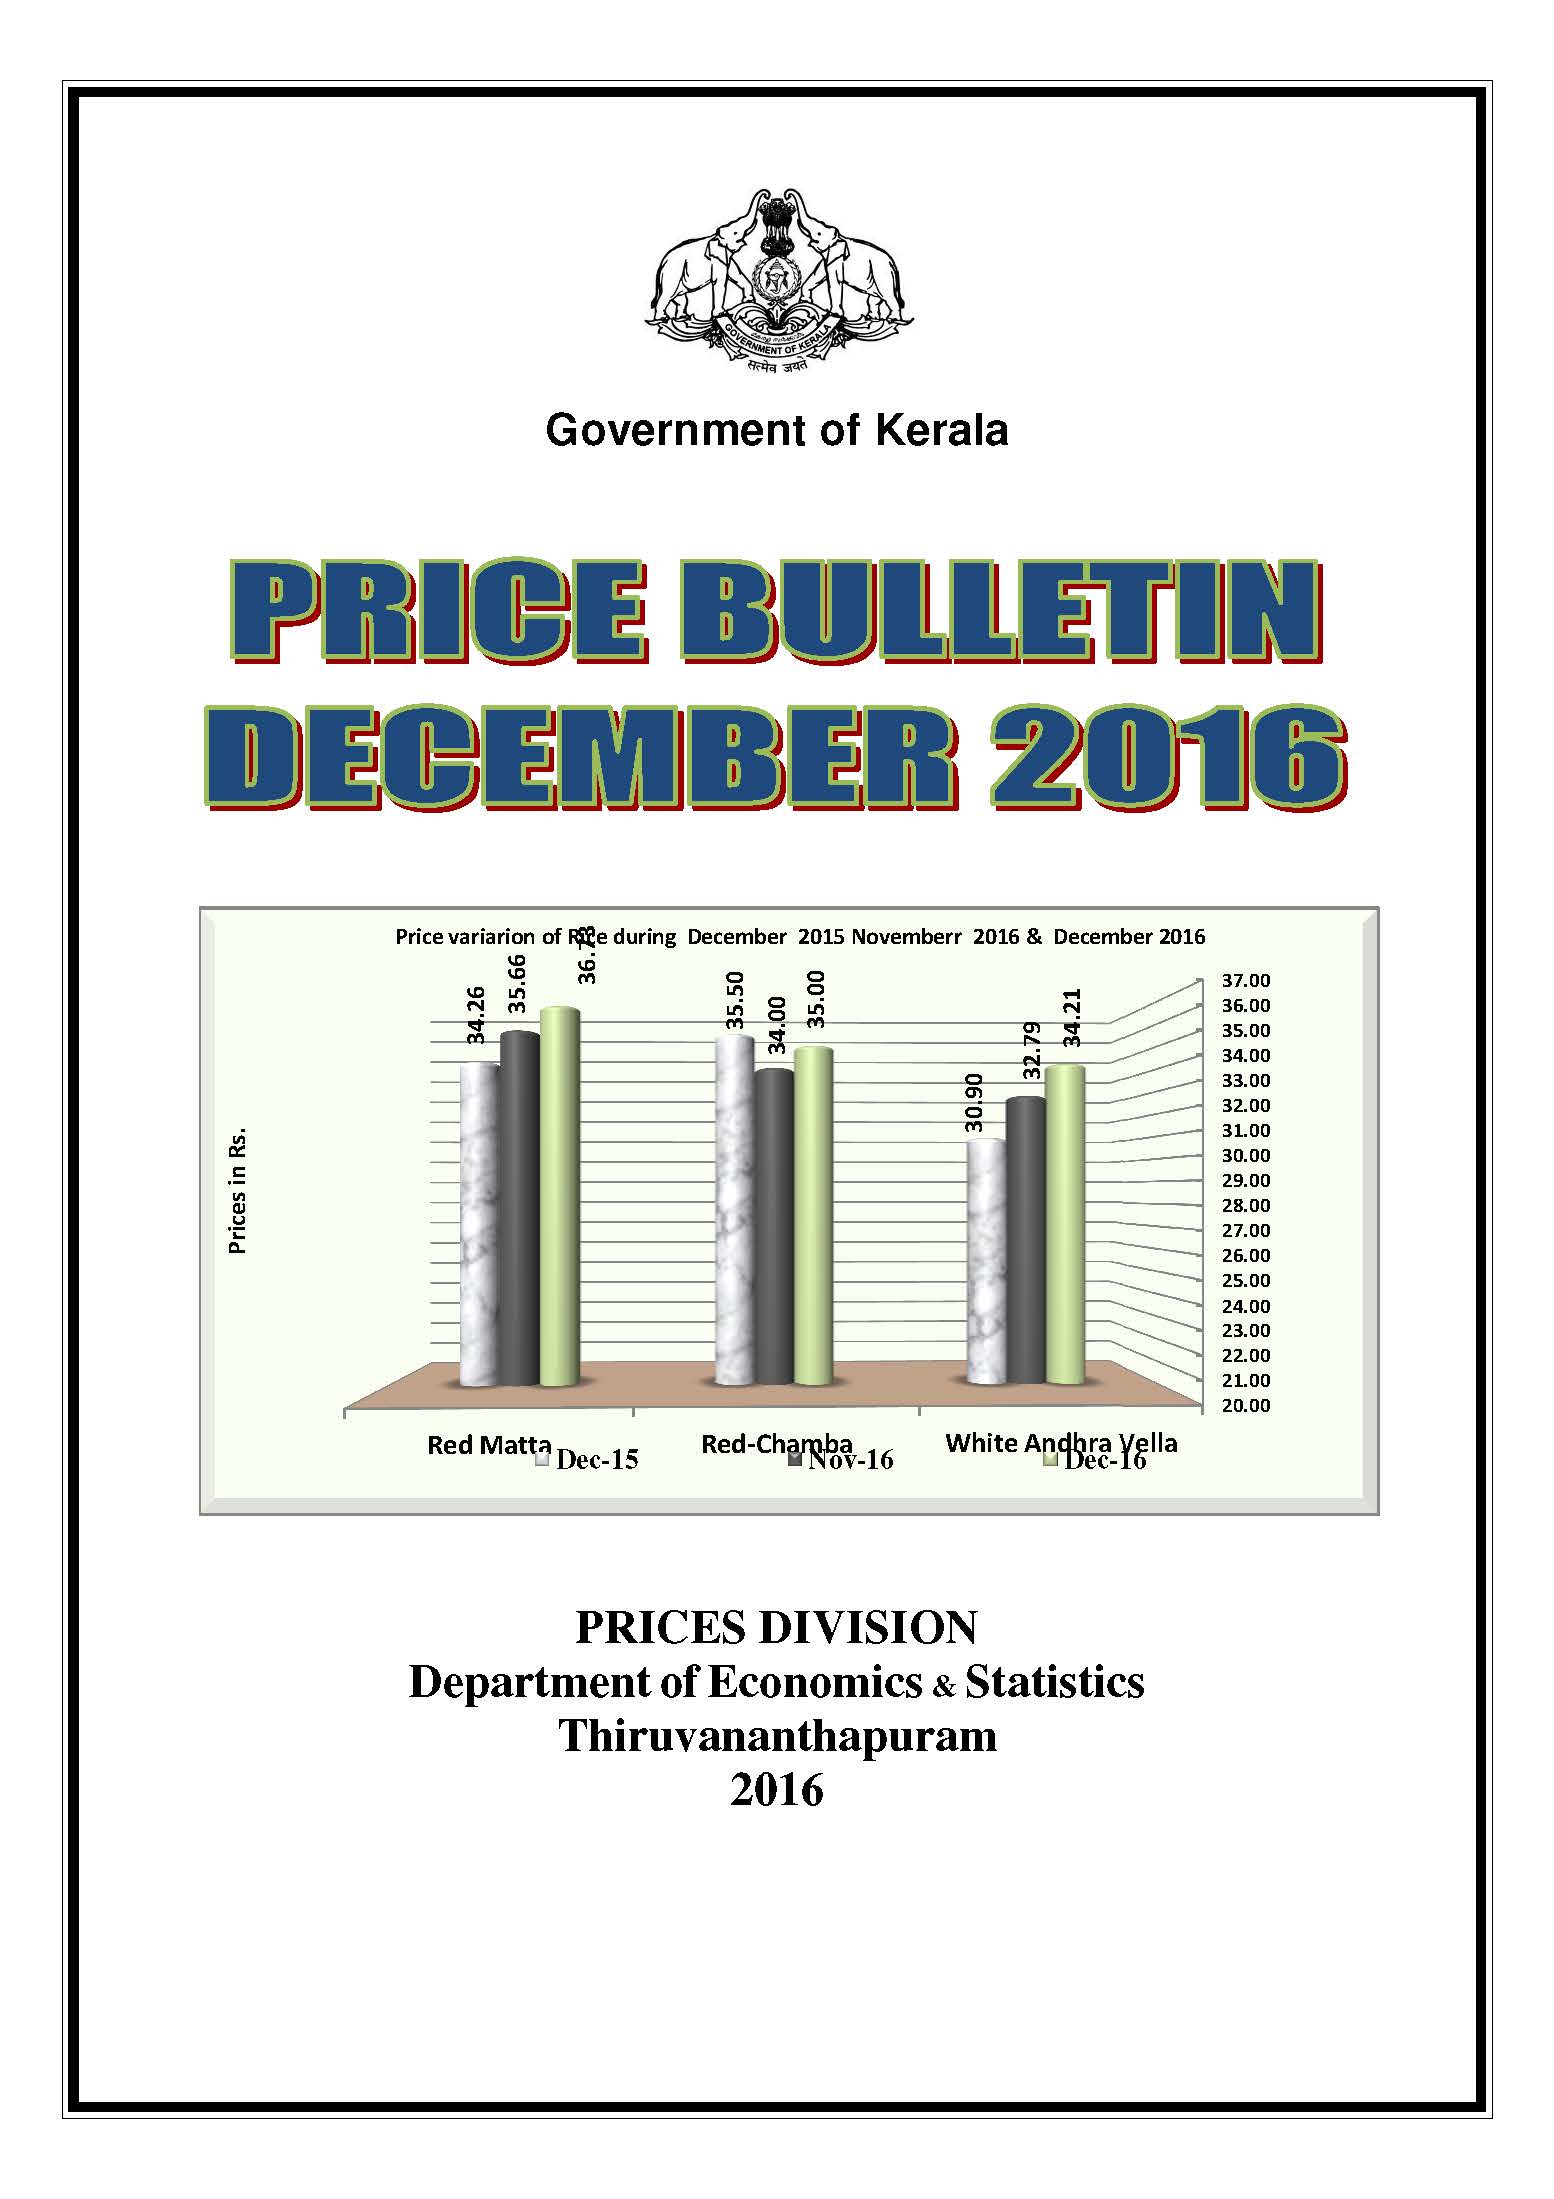 Price Bulletin December 2016